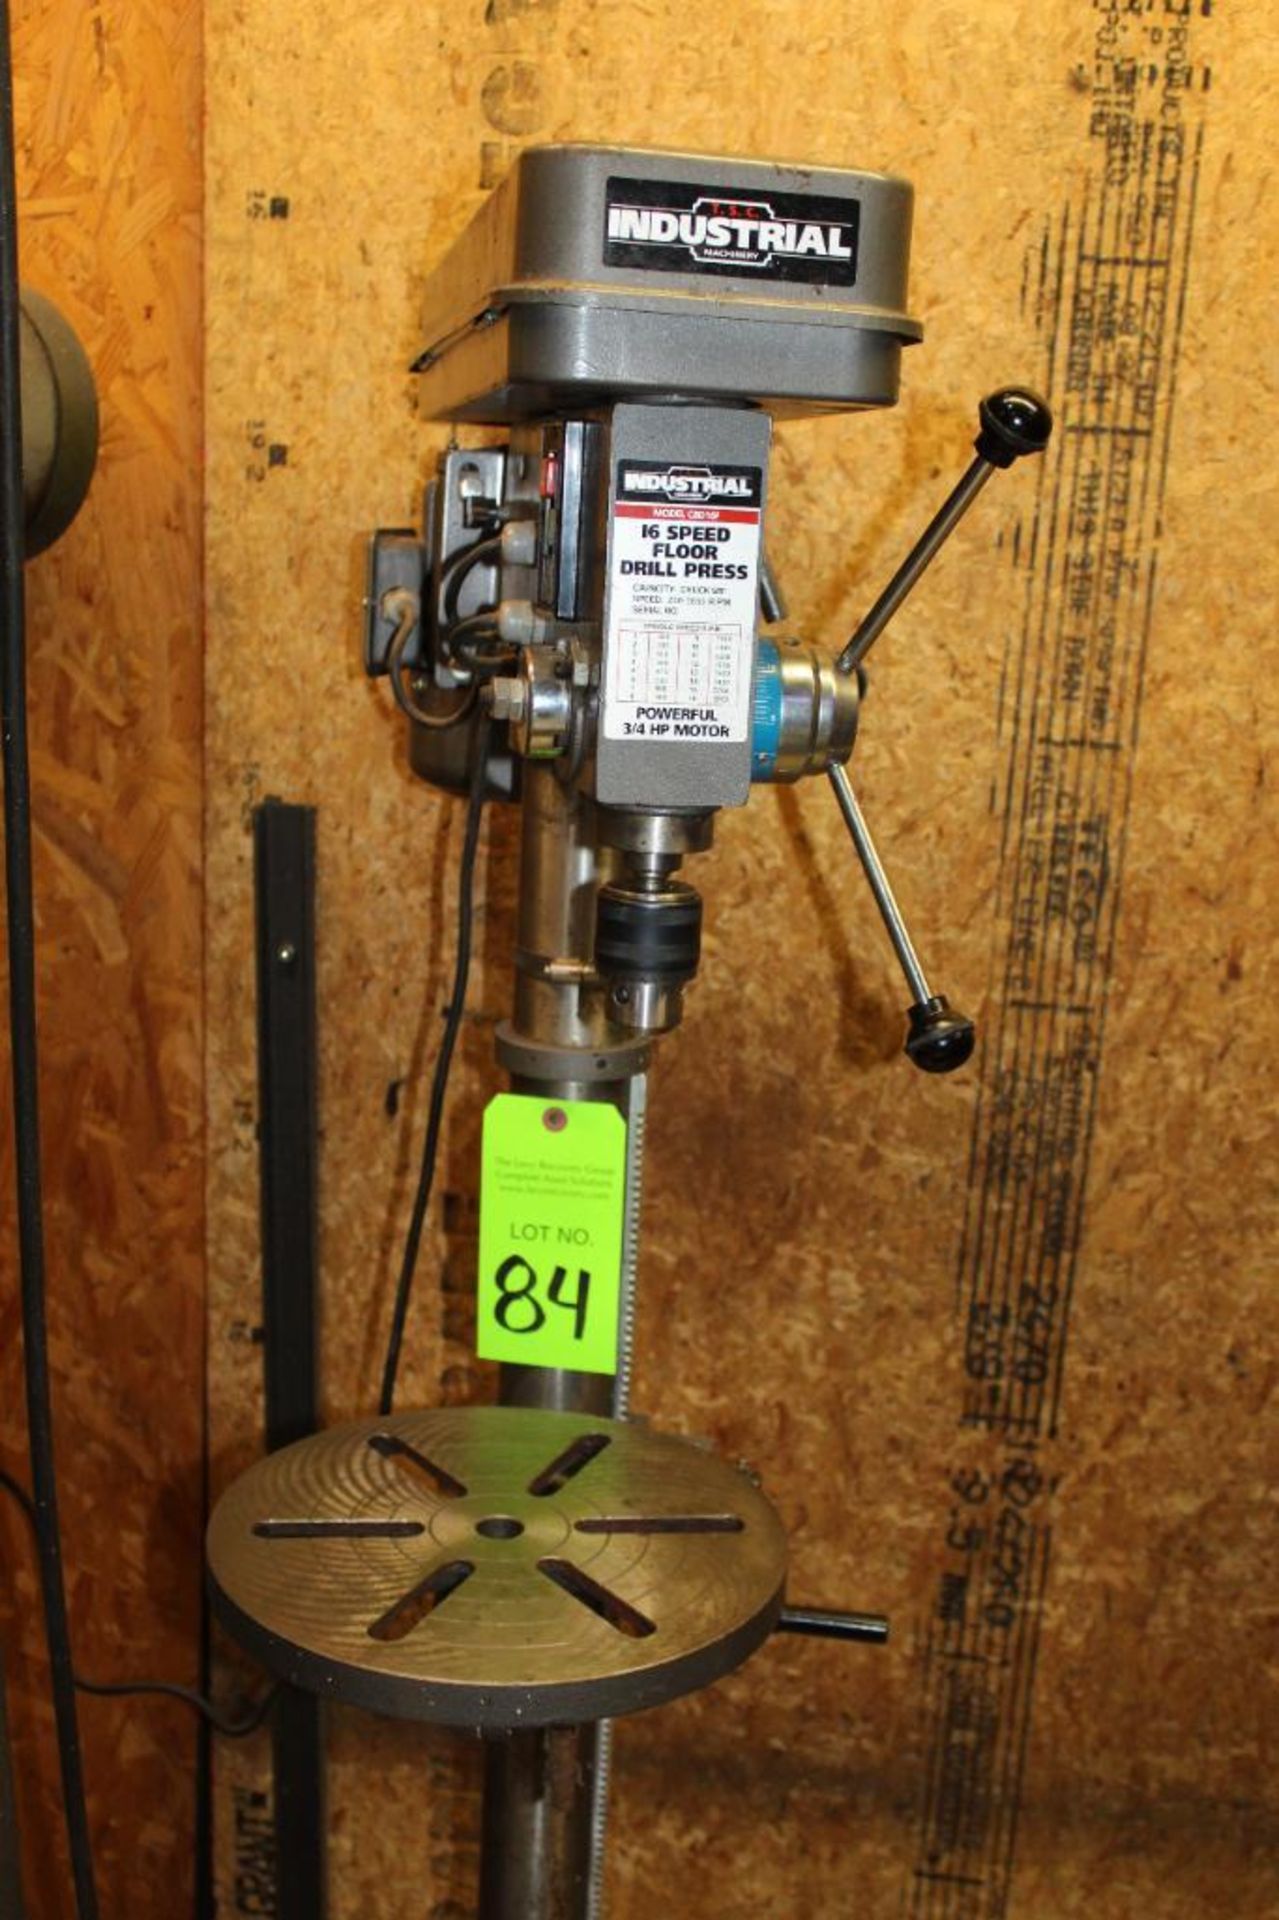 T.S.C. Industrial Machinery 16 Speed Floor Drill Press Model CBD16F - Image 8 of 8